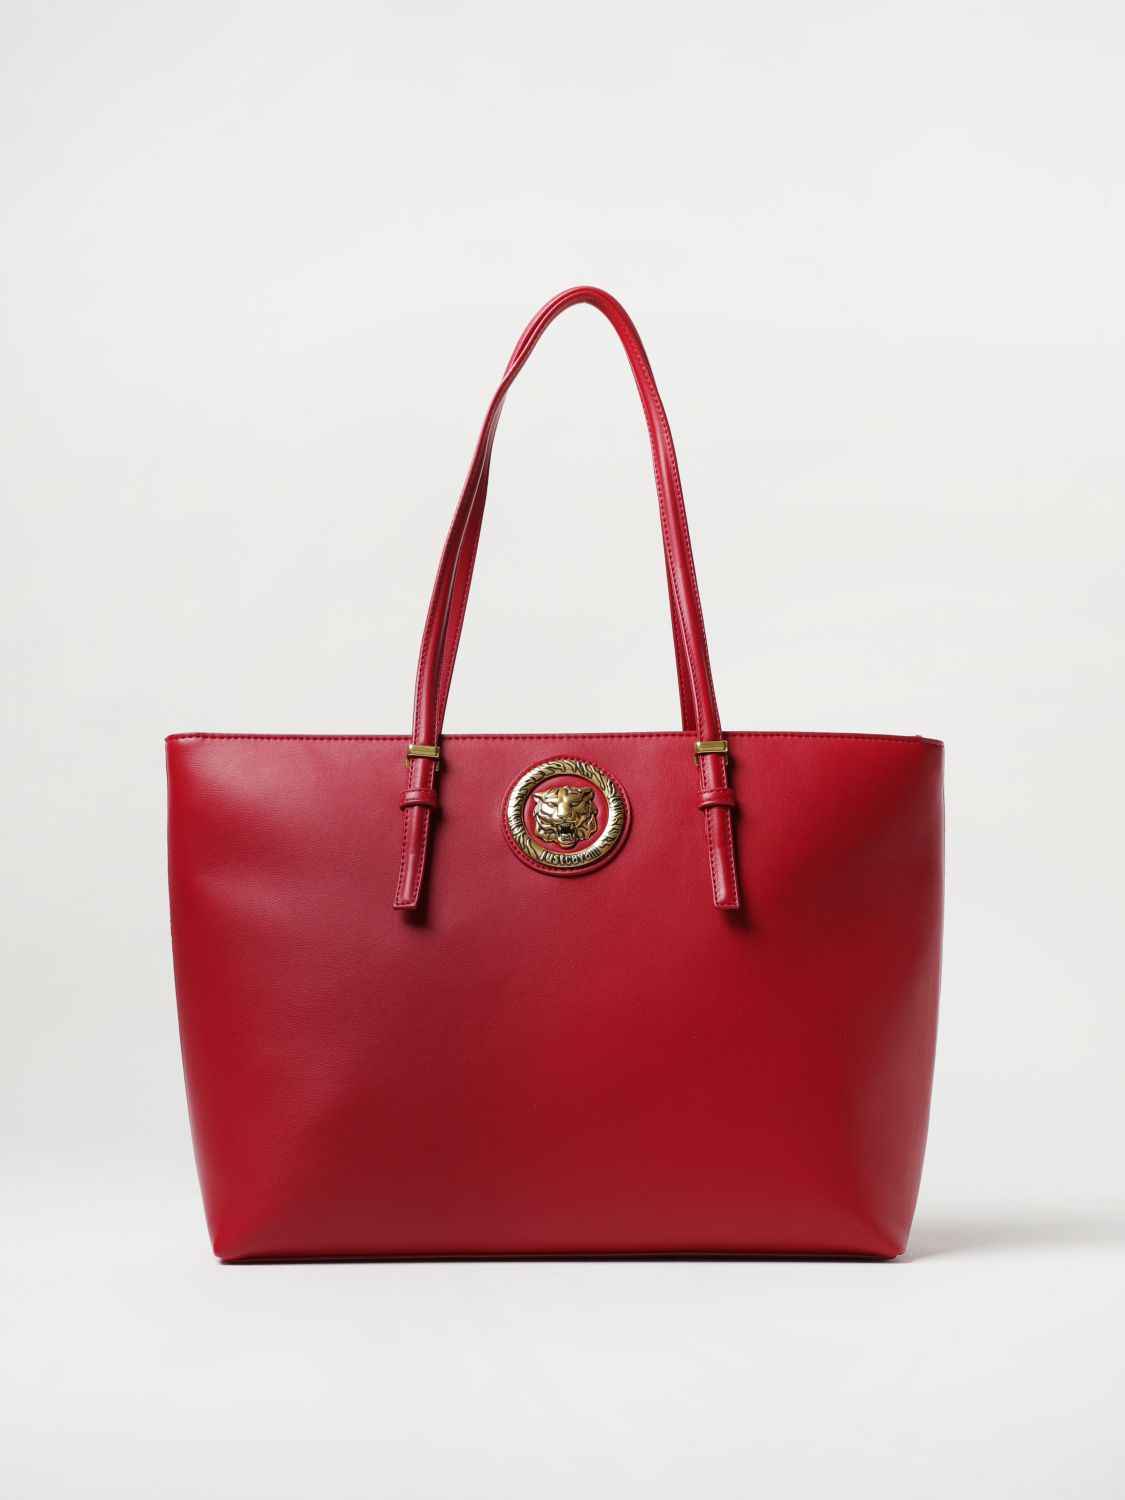 Just Cavalli Women's Tote Bags - Red - Shoulder Bags